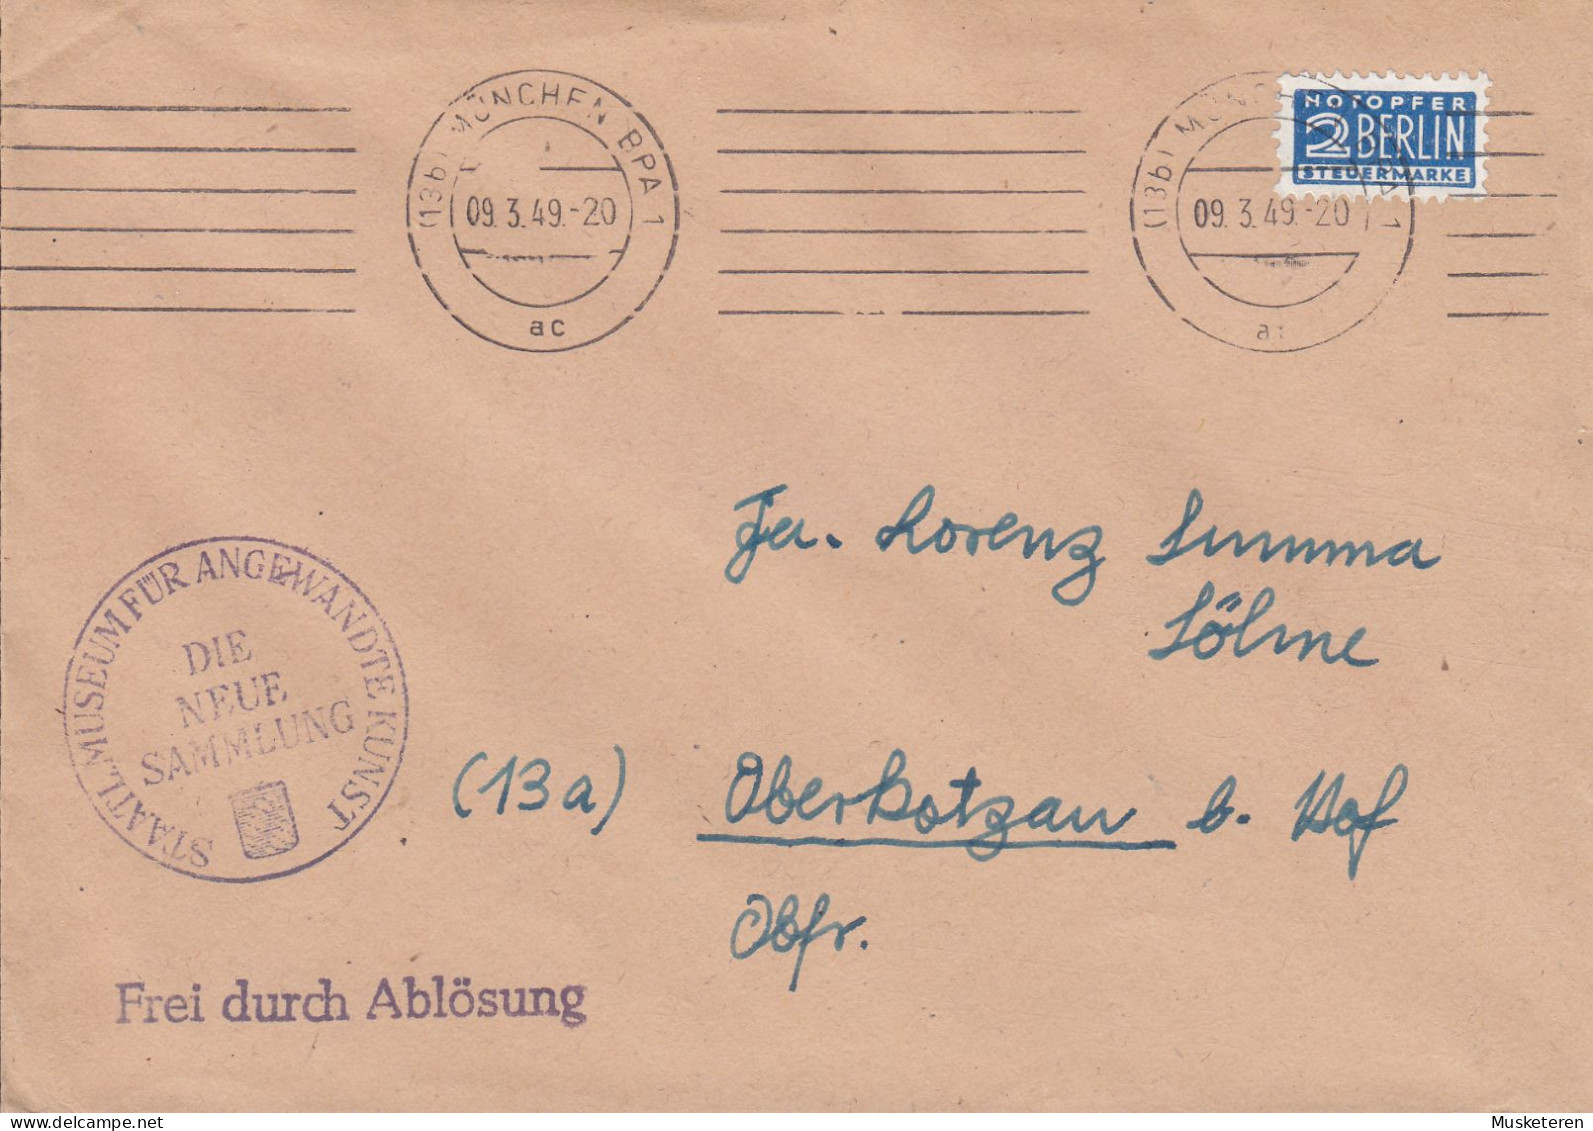 Berlin DIE NEUE SAMMLUNG Staatl. Museum Angewandte Kunt MÜNCHEN 1949 Cover Brief OBERKATZAN B. Hof. NOTOPFER Steuermarke - Covers & Documents